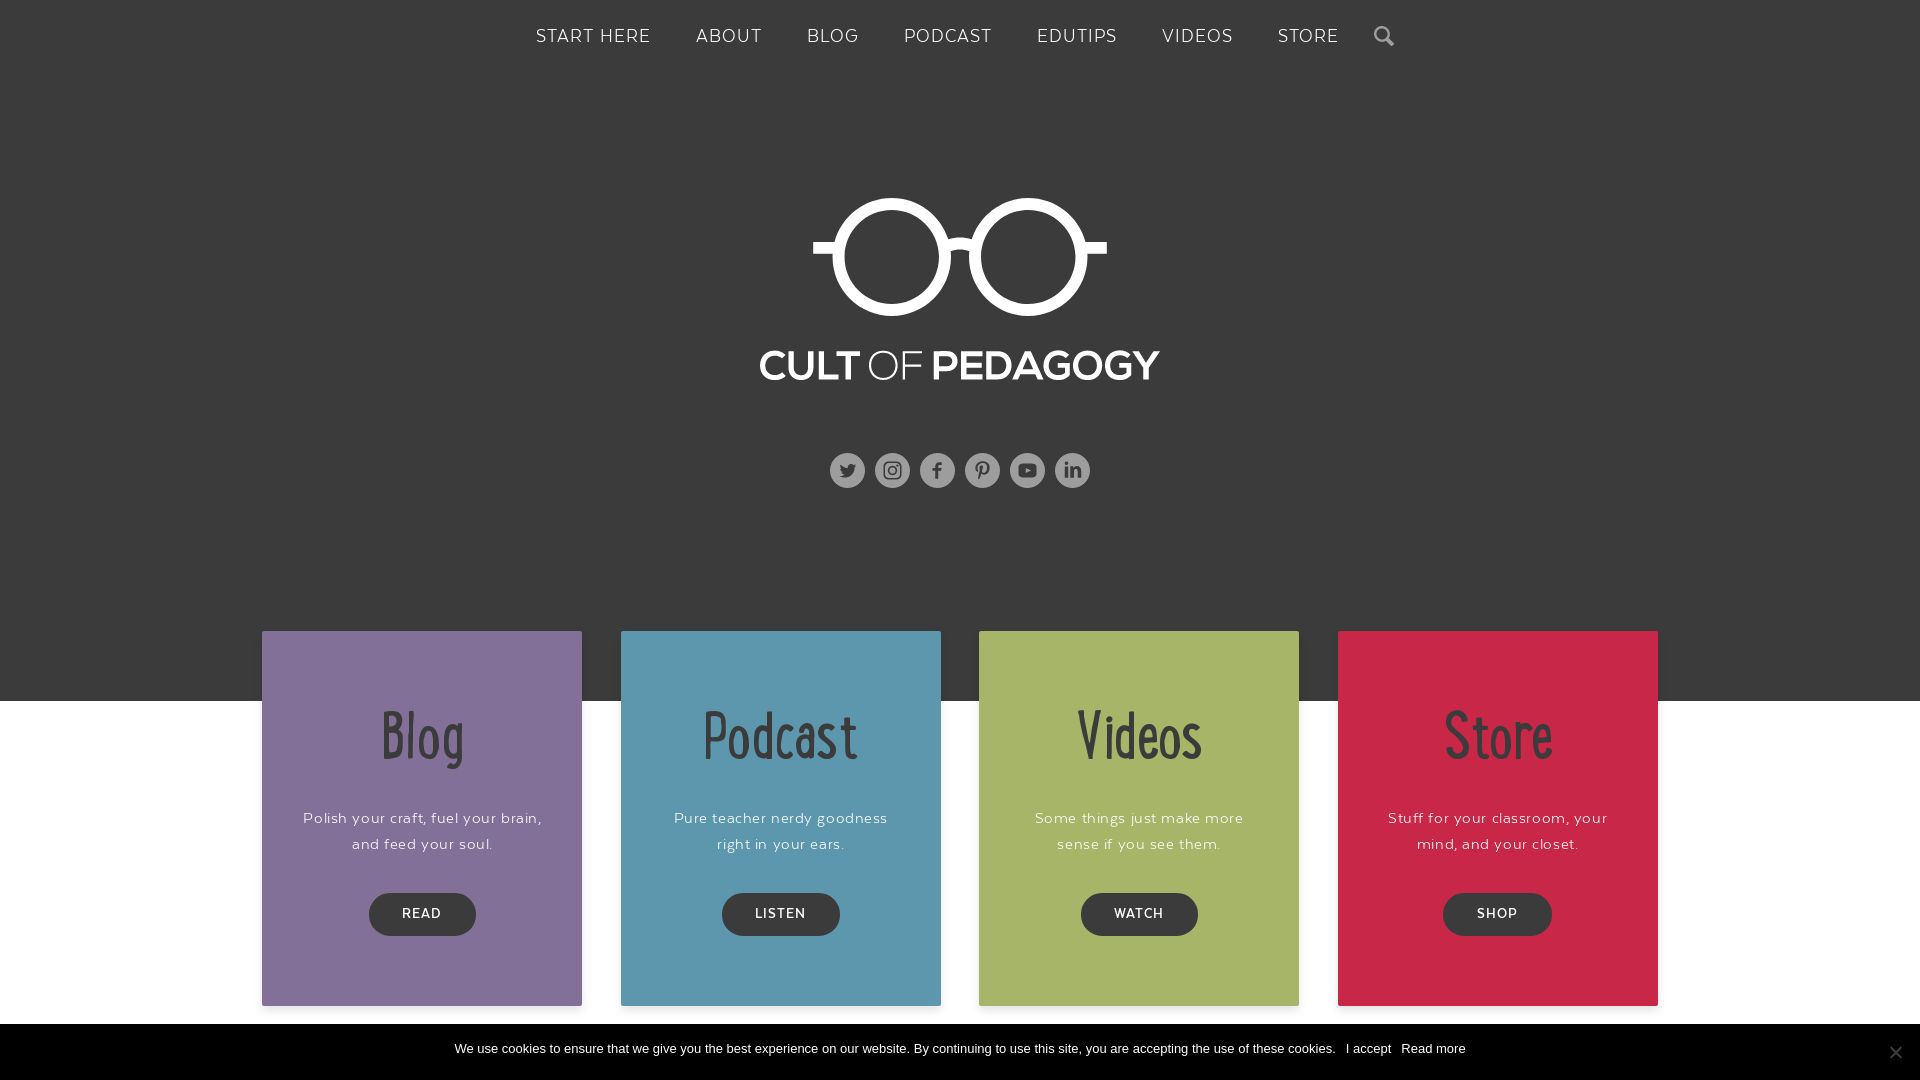 Website status cultofpedagogy.com is   ONLINE